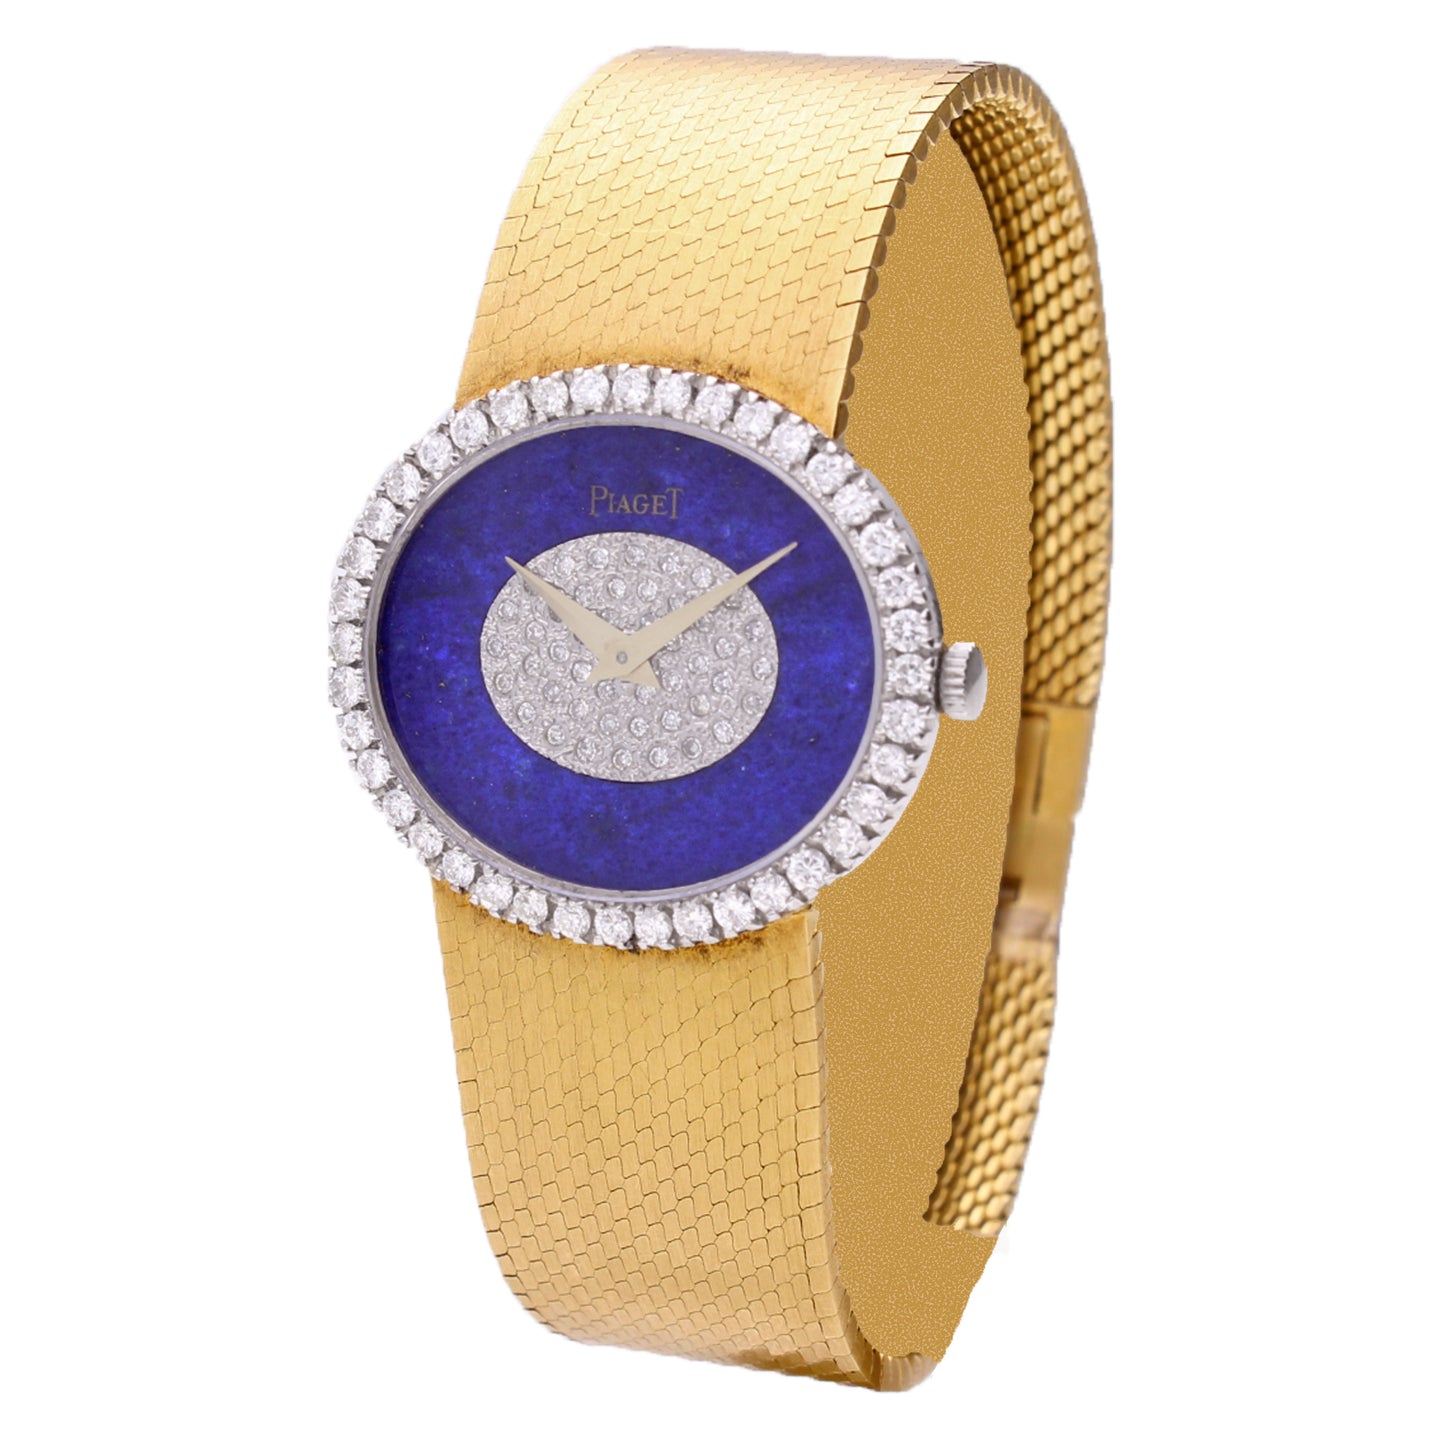 18ct yellow gold Piaget, diamond and lapis lazuli dial bracelet watch. Made 1970